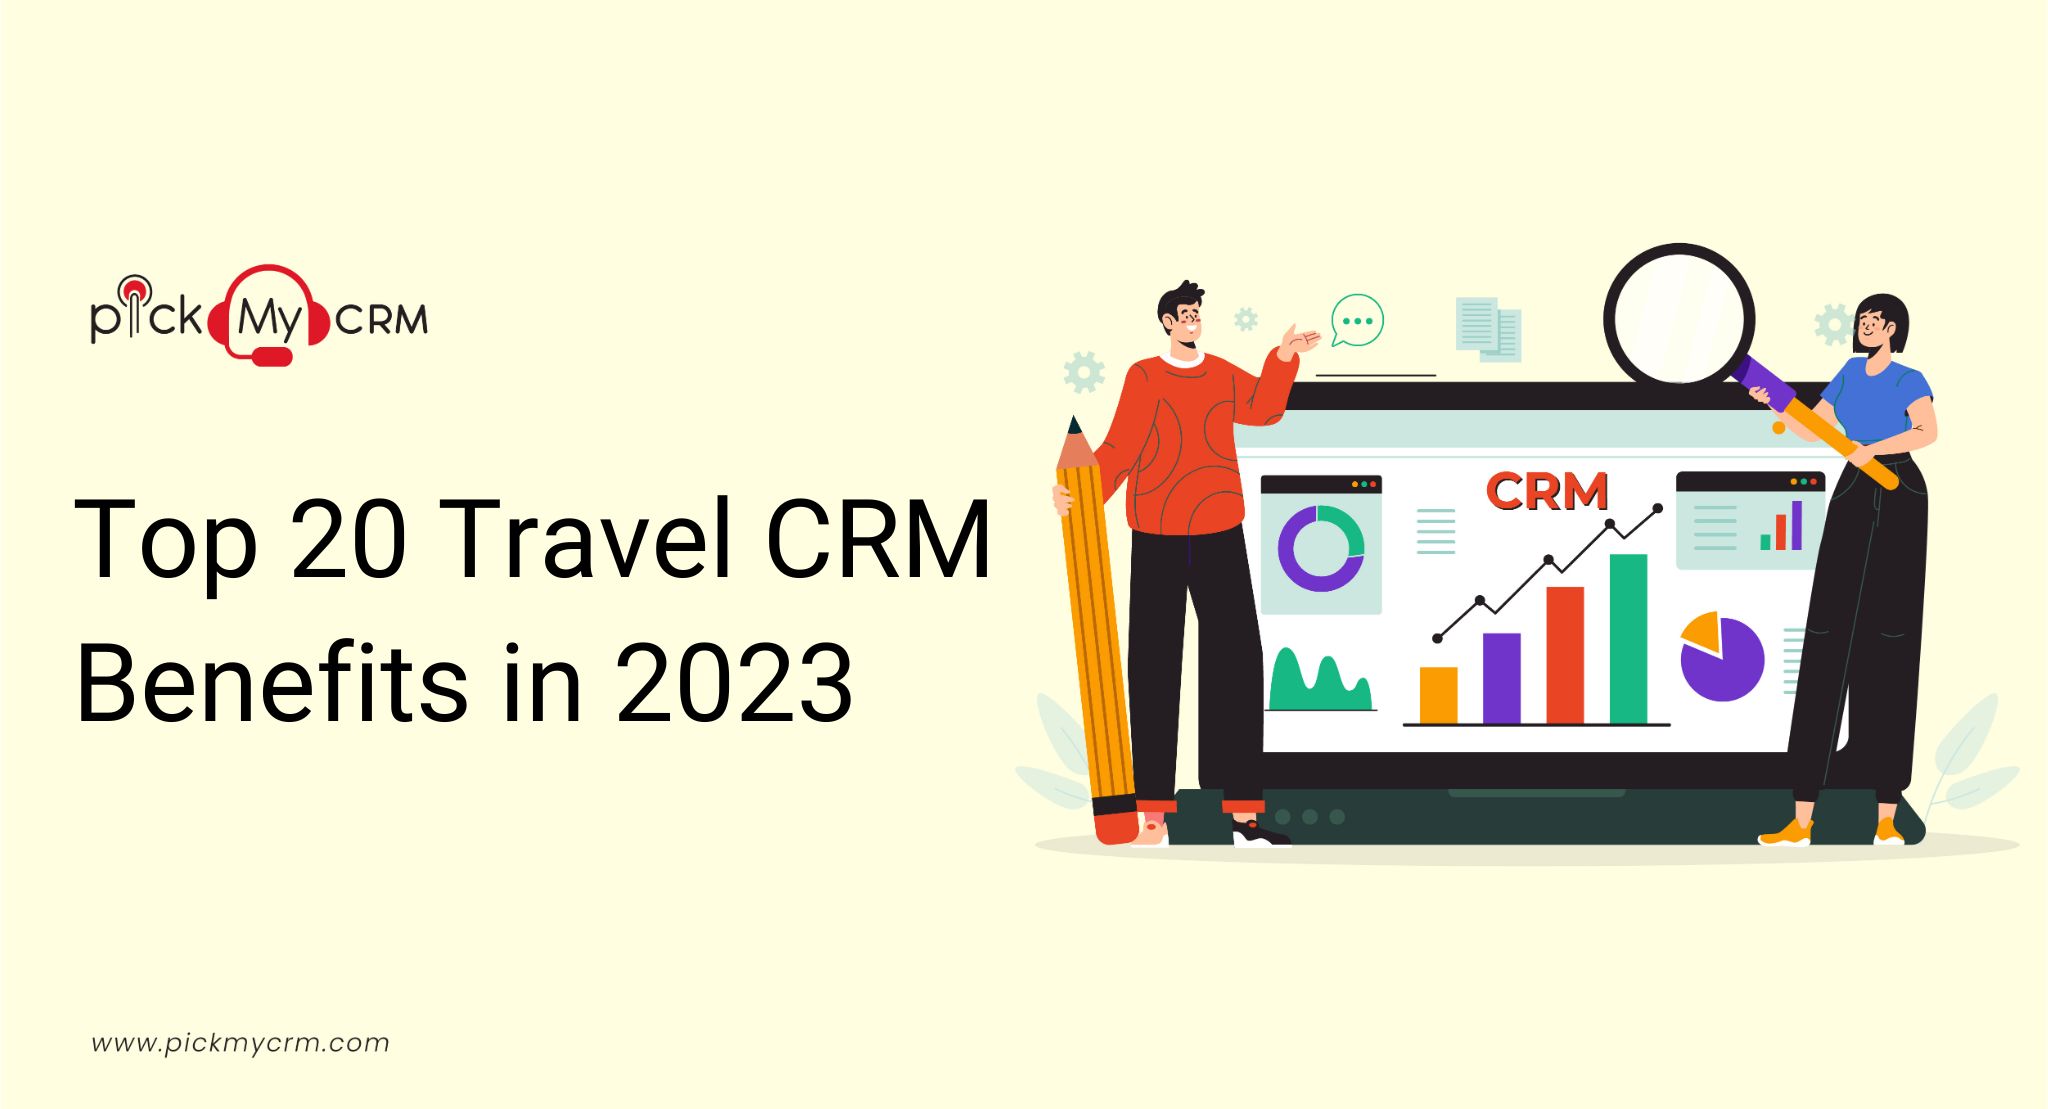 Top 20 Travel CRM Benefits in 2023